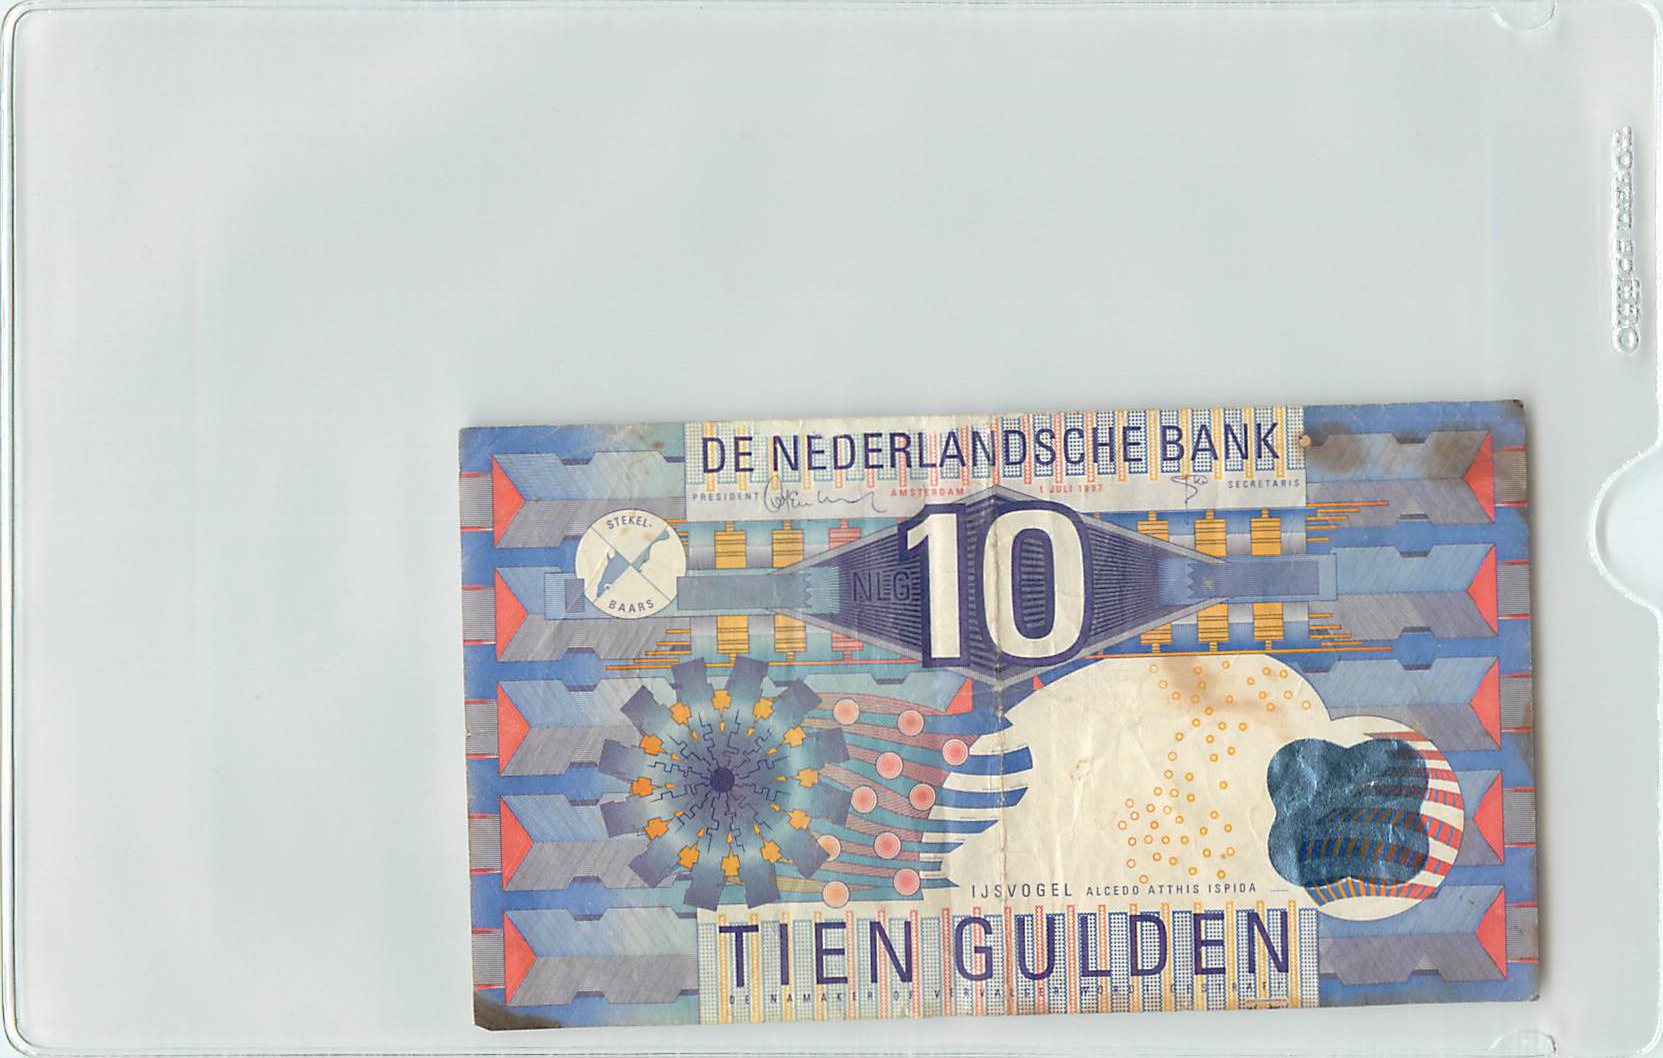 Netherlands 10 Gukden banknote front 2015_08_18_06_43_120001.jpg